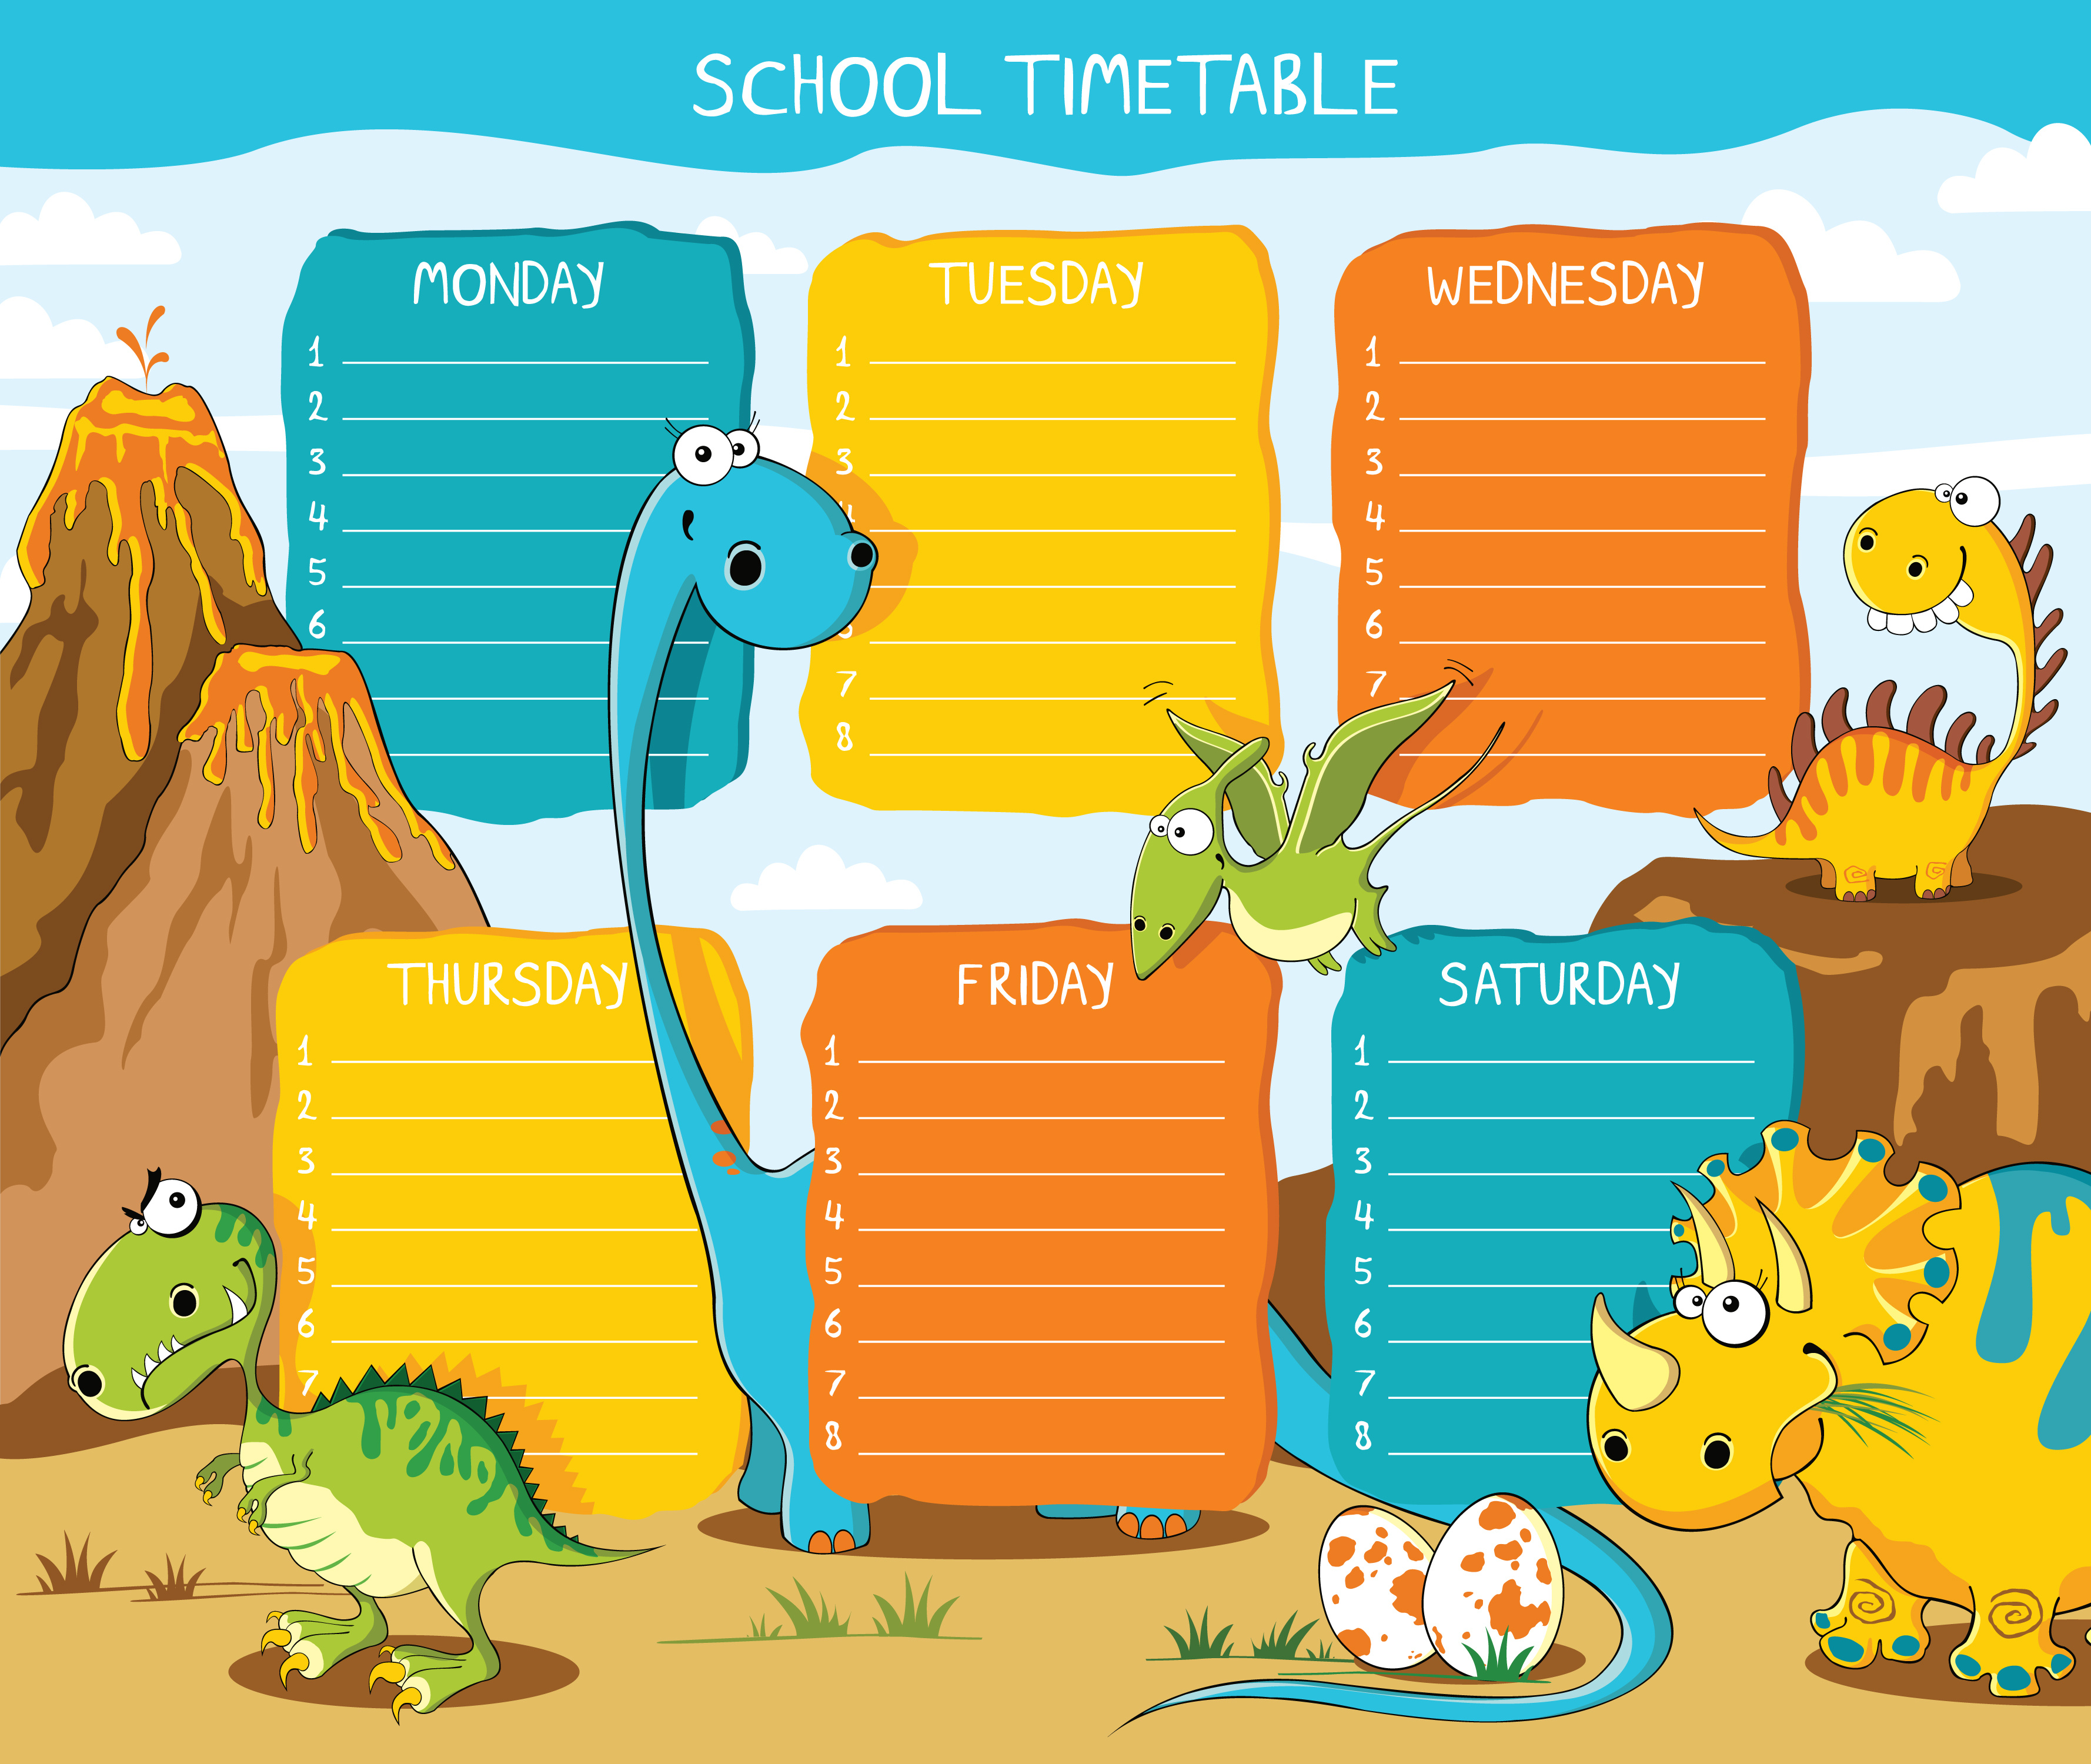 school-timetable-horarios-en-ingles11